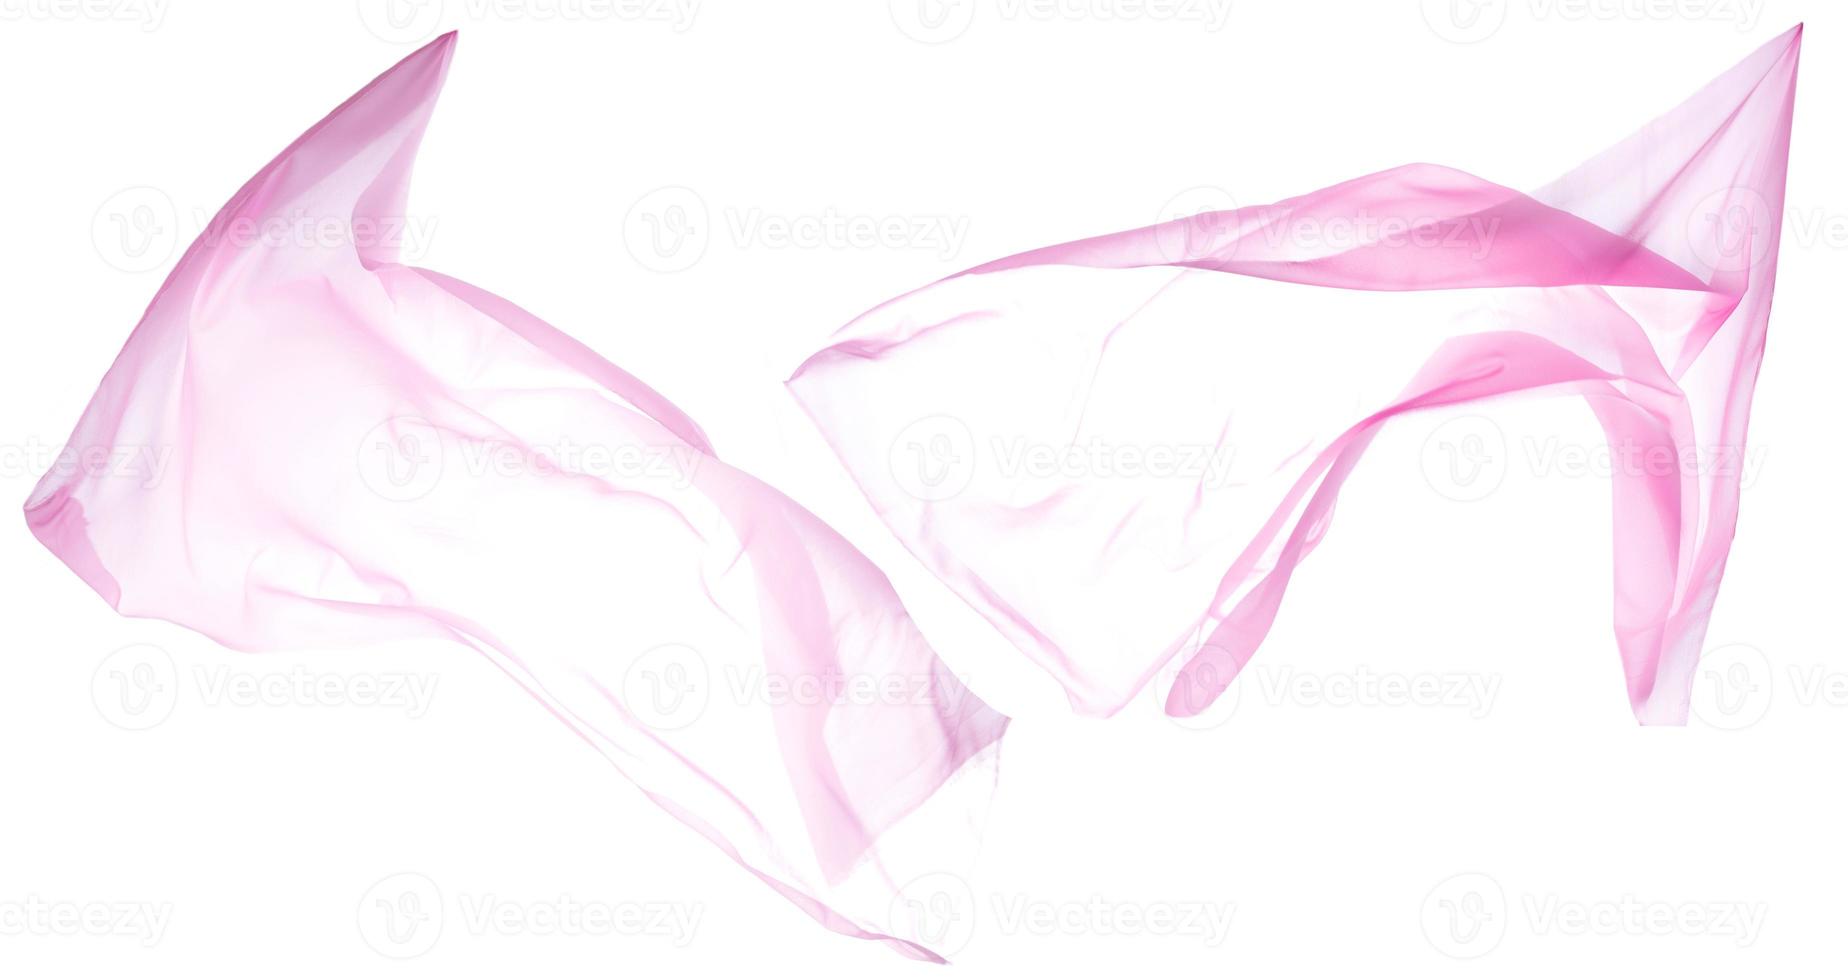 tissu rose transparent élégant et lisse photo